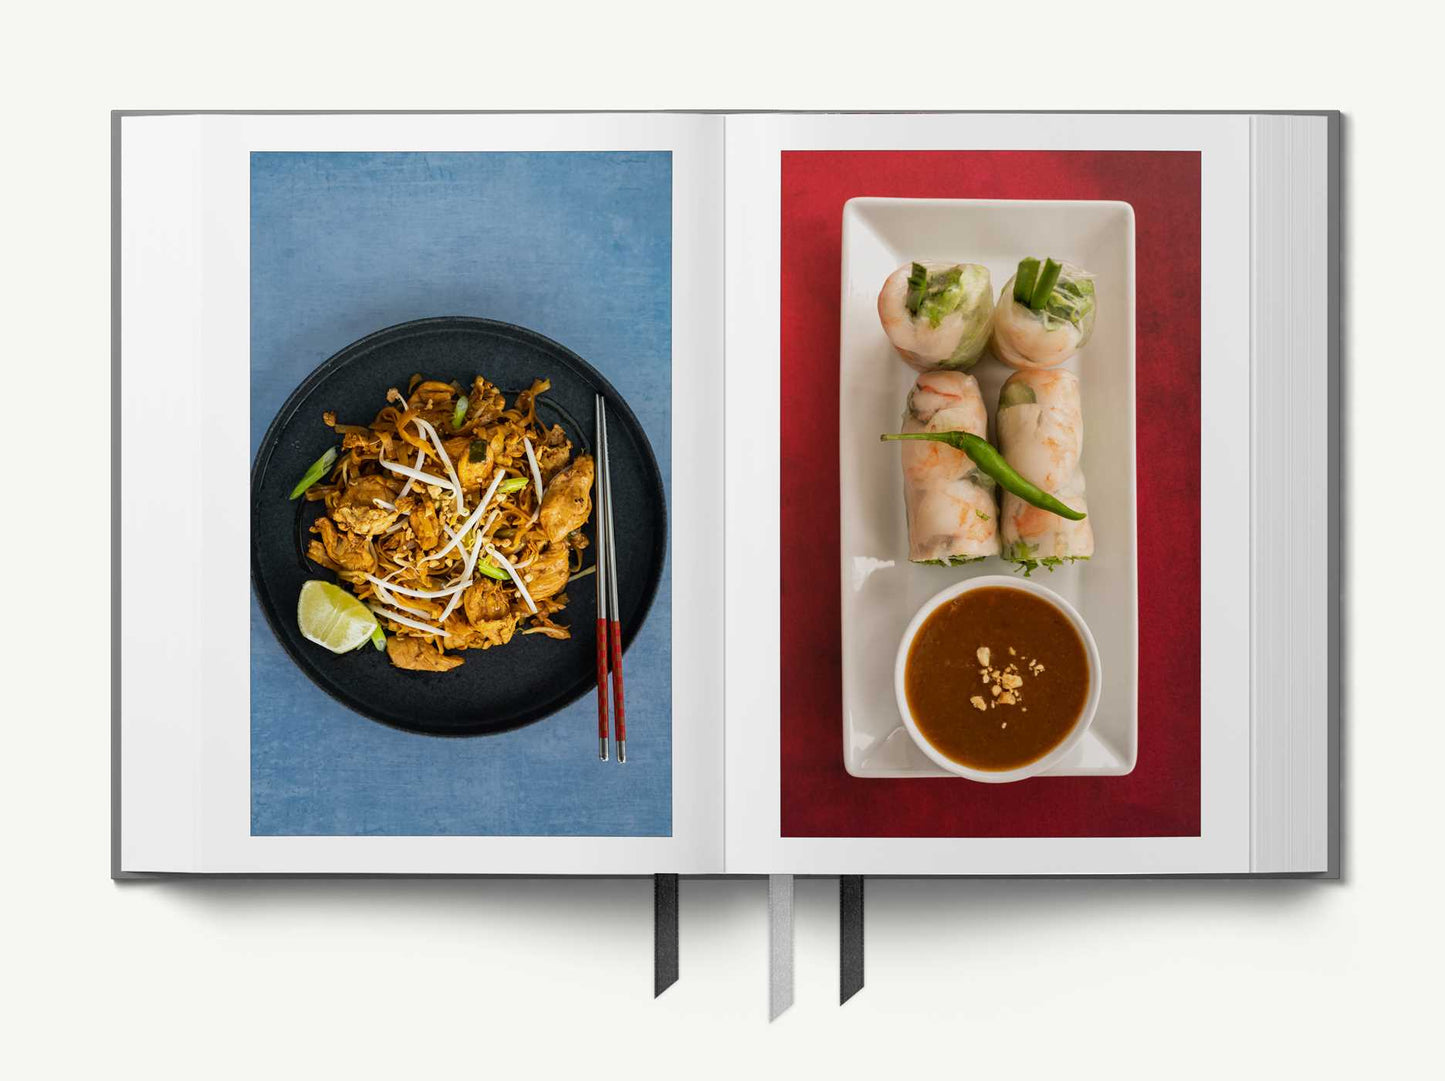 Asia: The Ultimate Cookbook (Chinese, Japanese, Korean, Thai, Vietnamese, Asian)